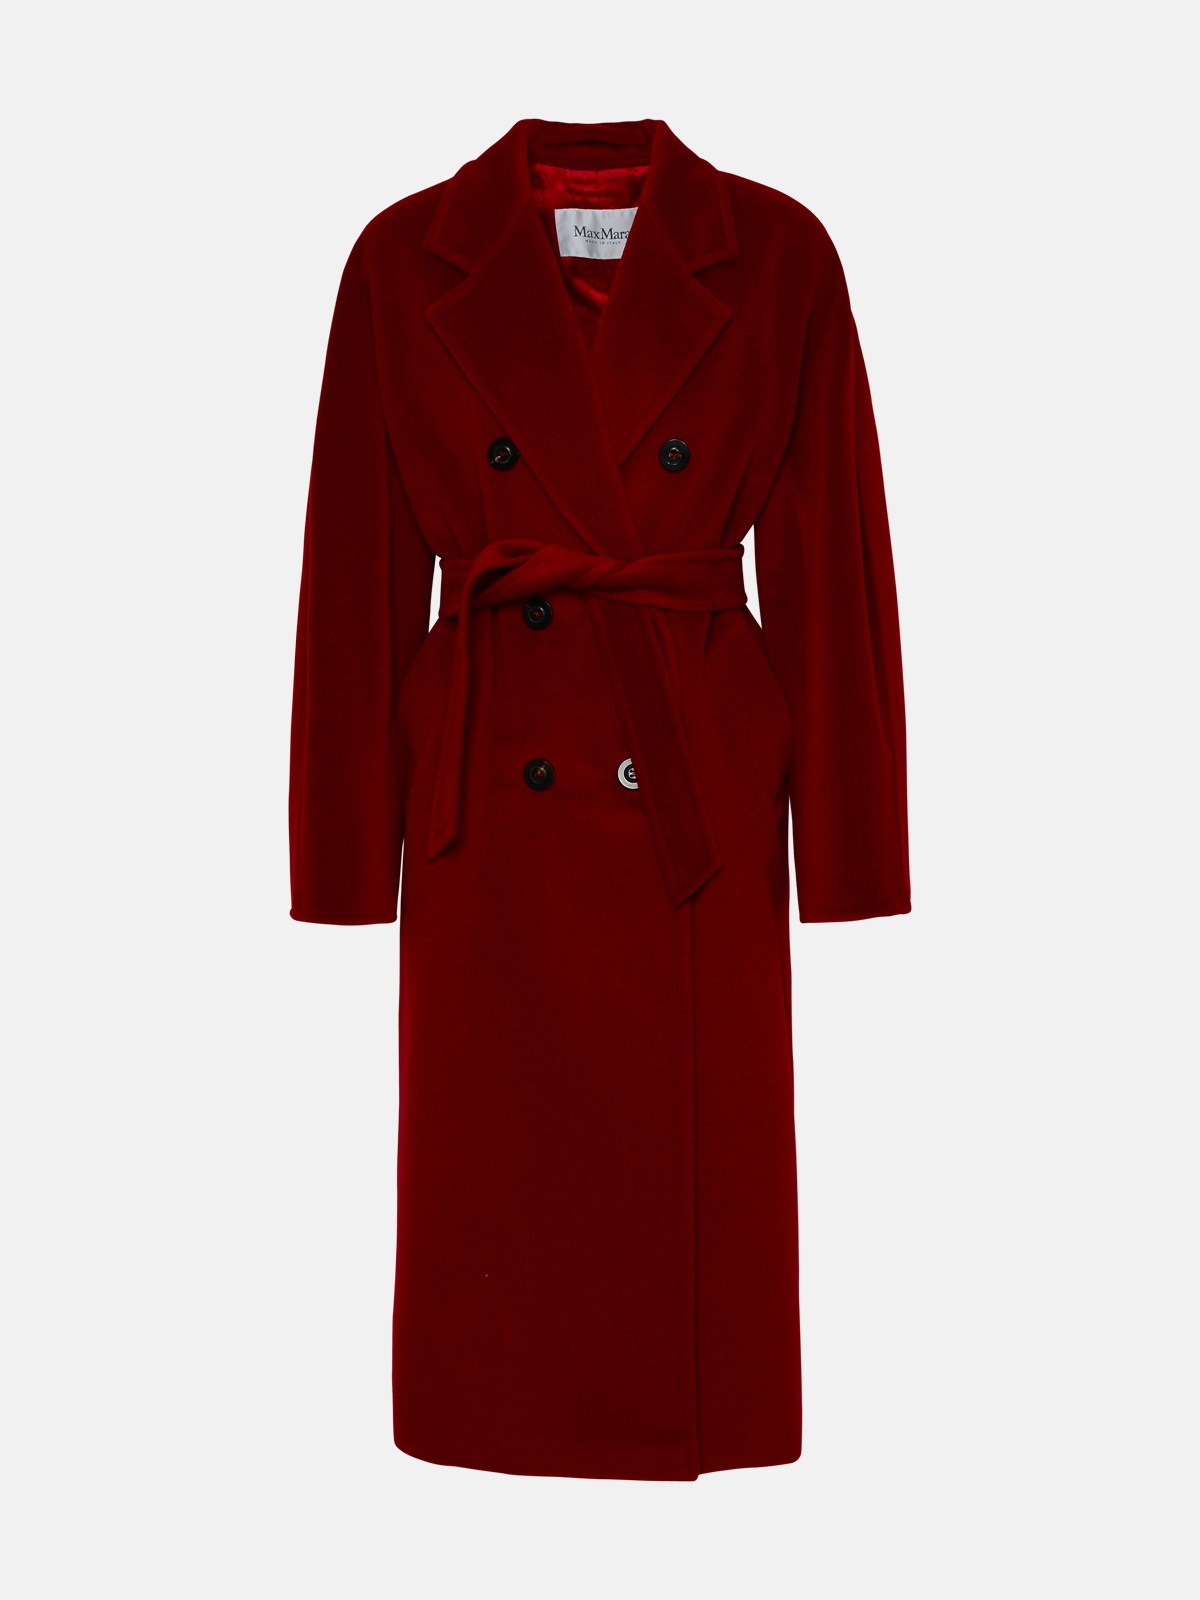 Max Mara Red Wool Blend Madame Coat